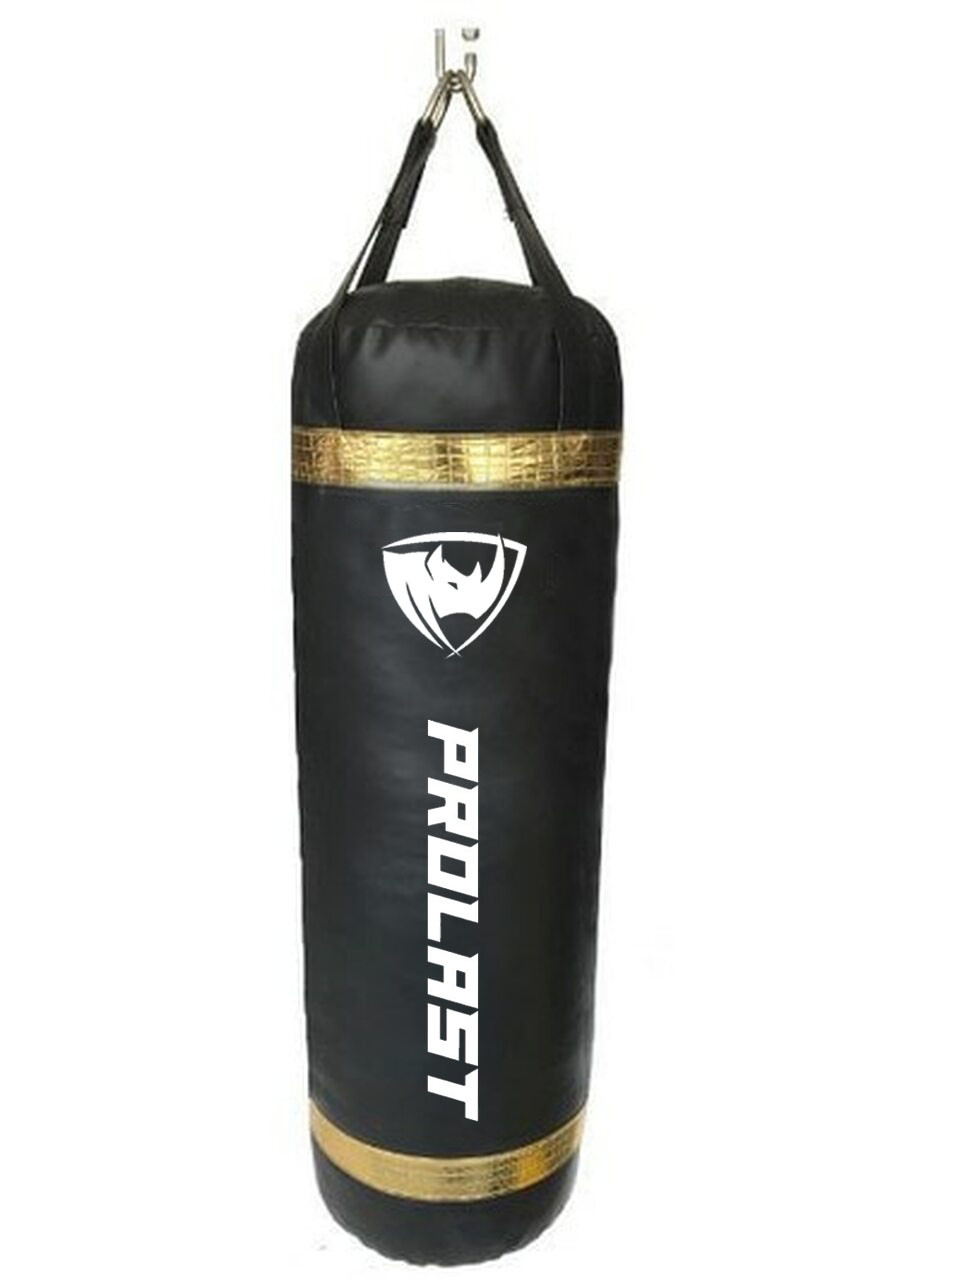 PROLAST Middleweight 85LB Punching Bag Boxing Black/Gold | PROLAST.com